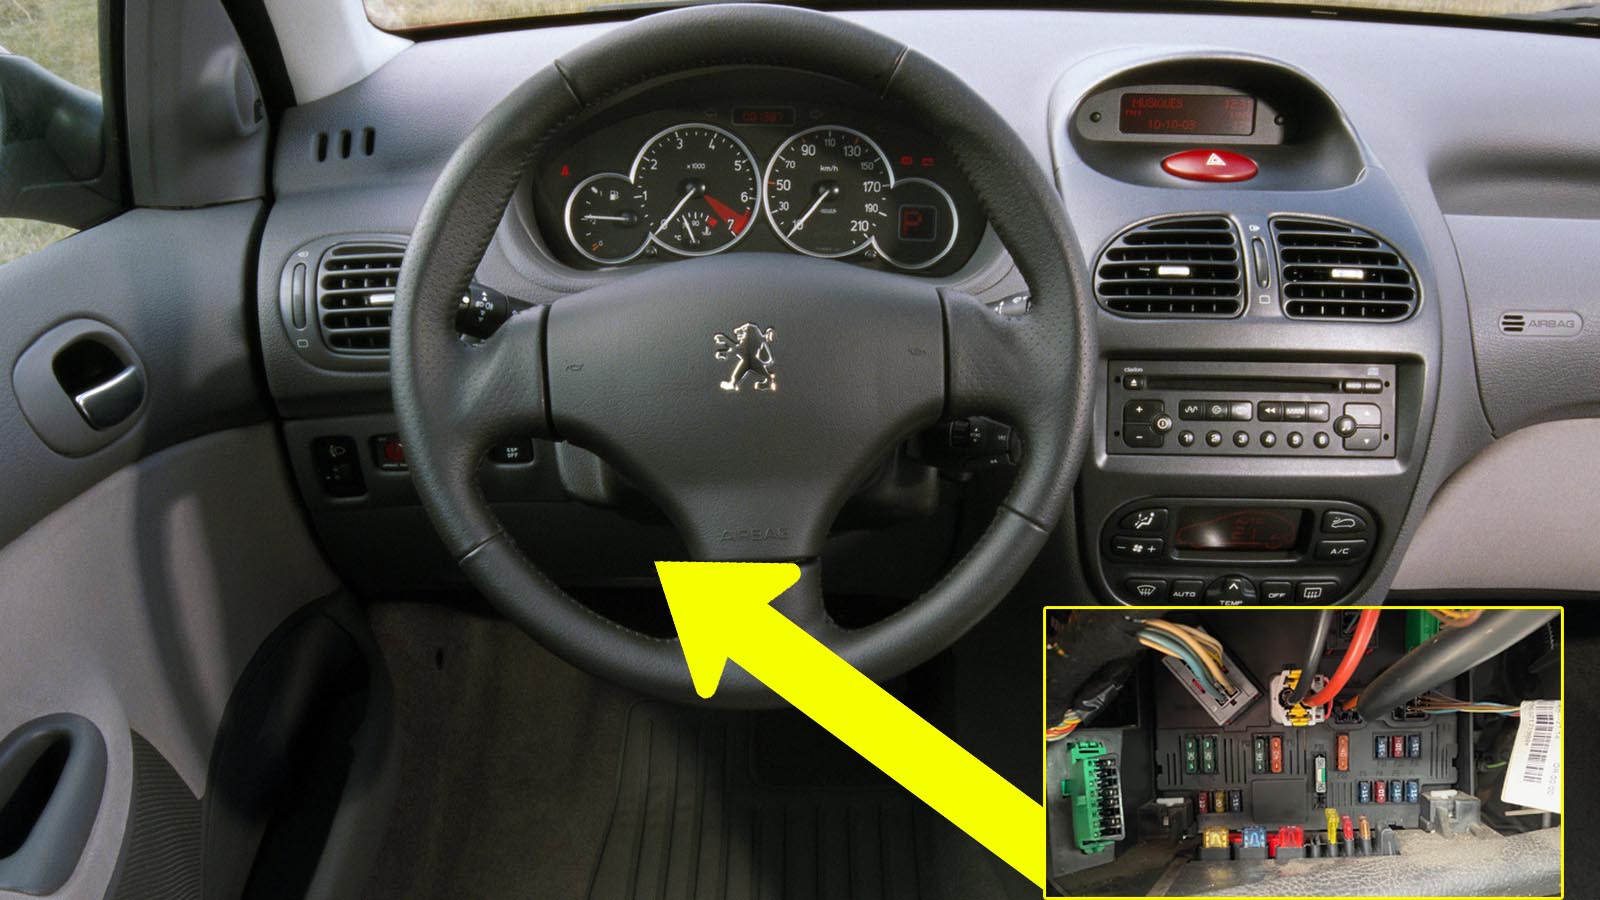 Peugeot 206 fuse box relay panel location diagram (explanation)